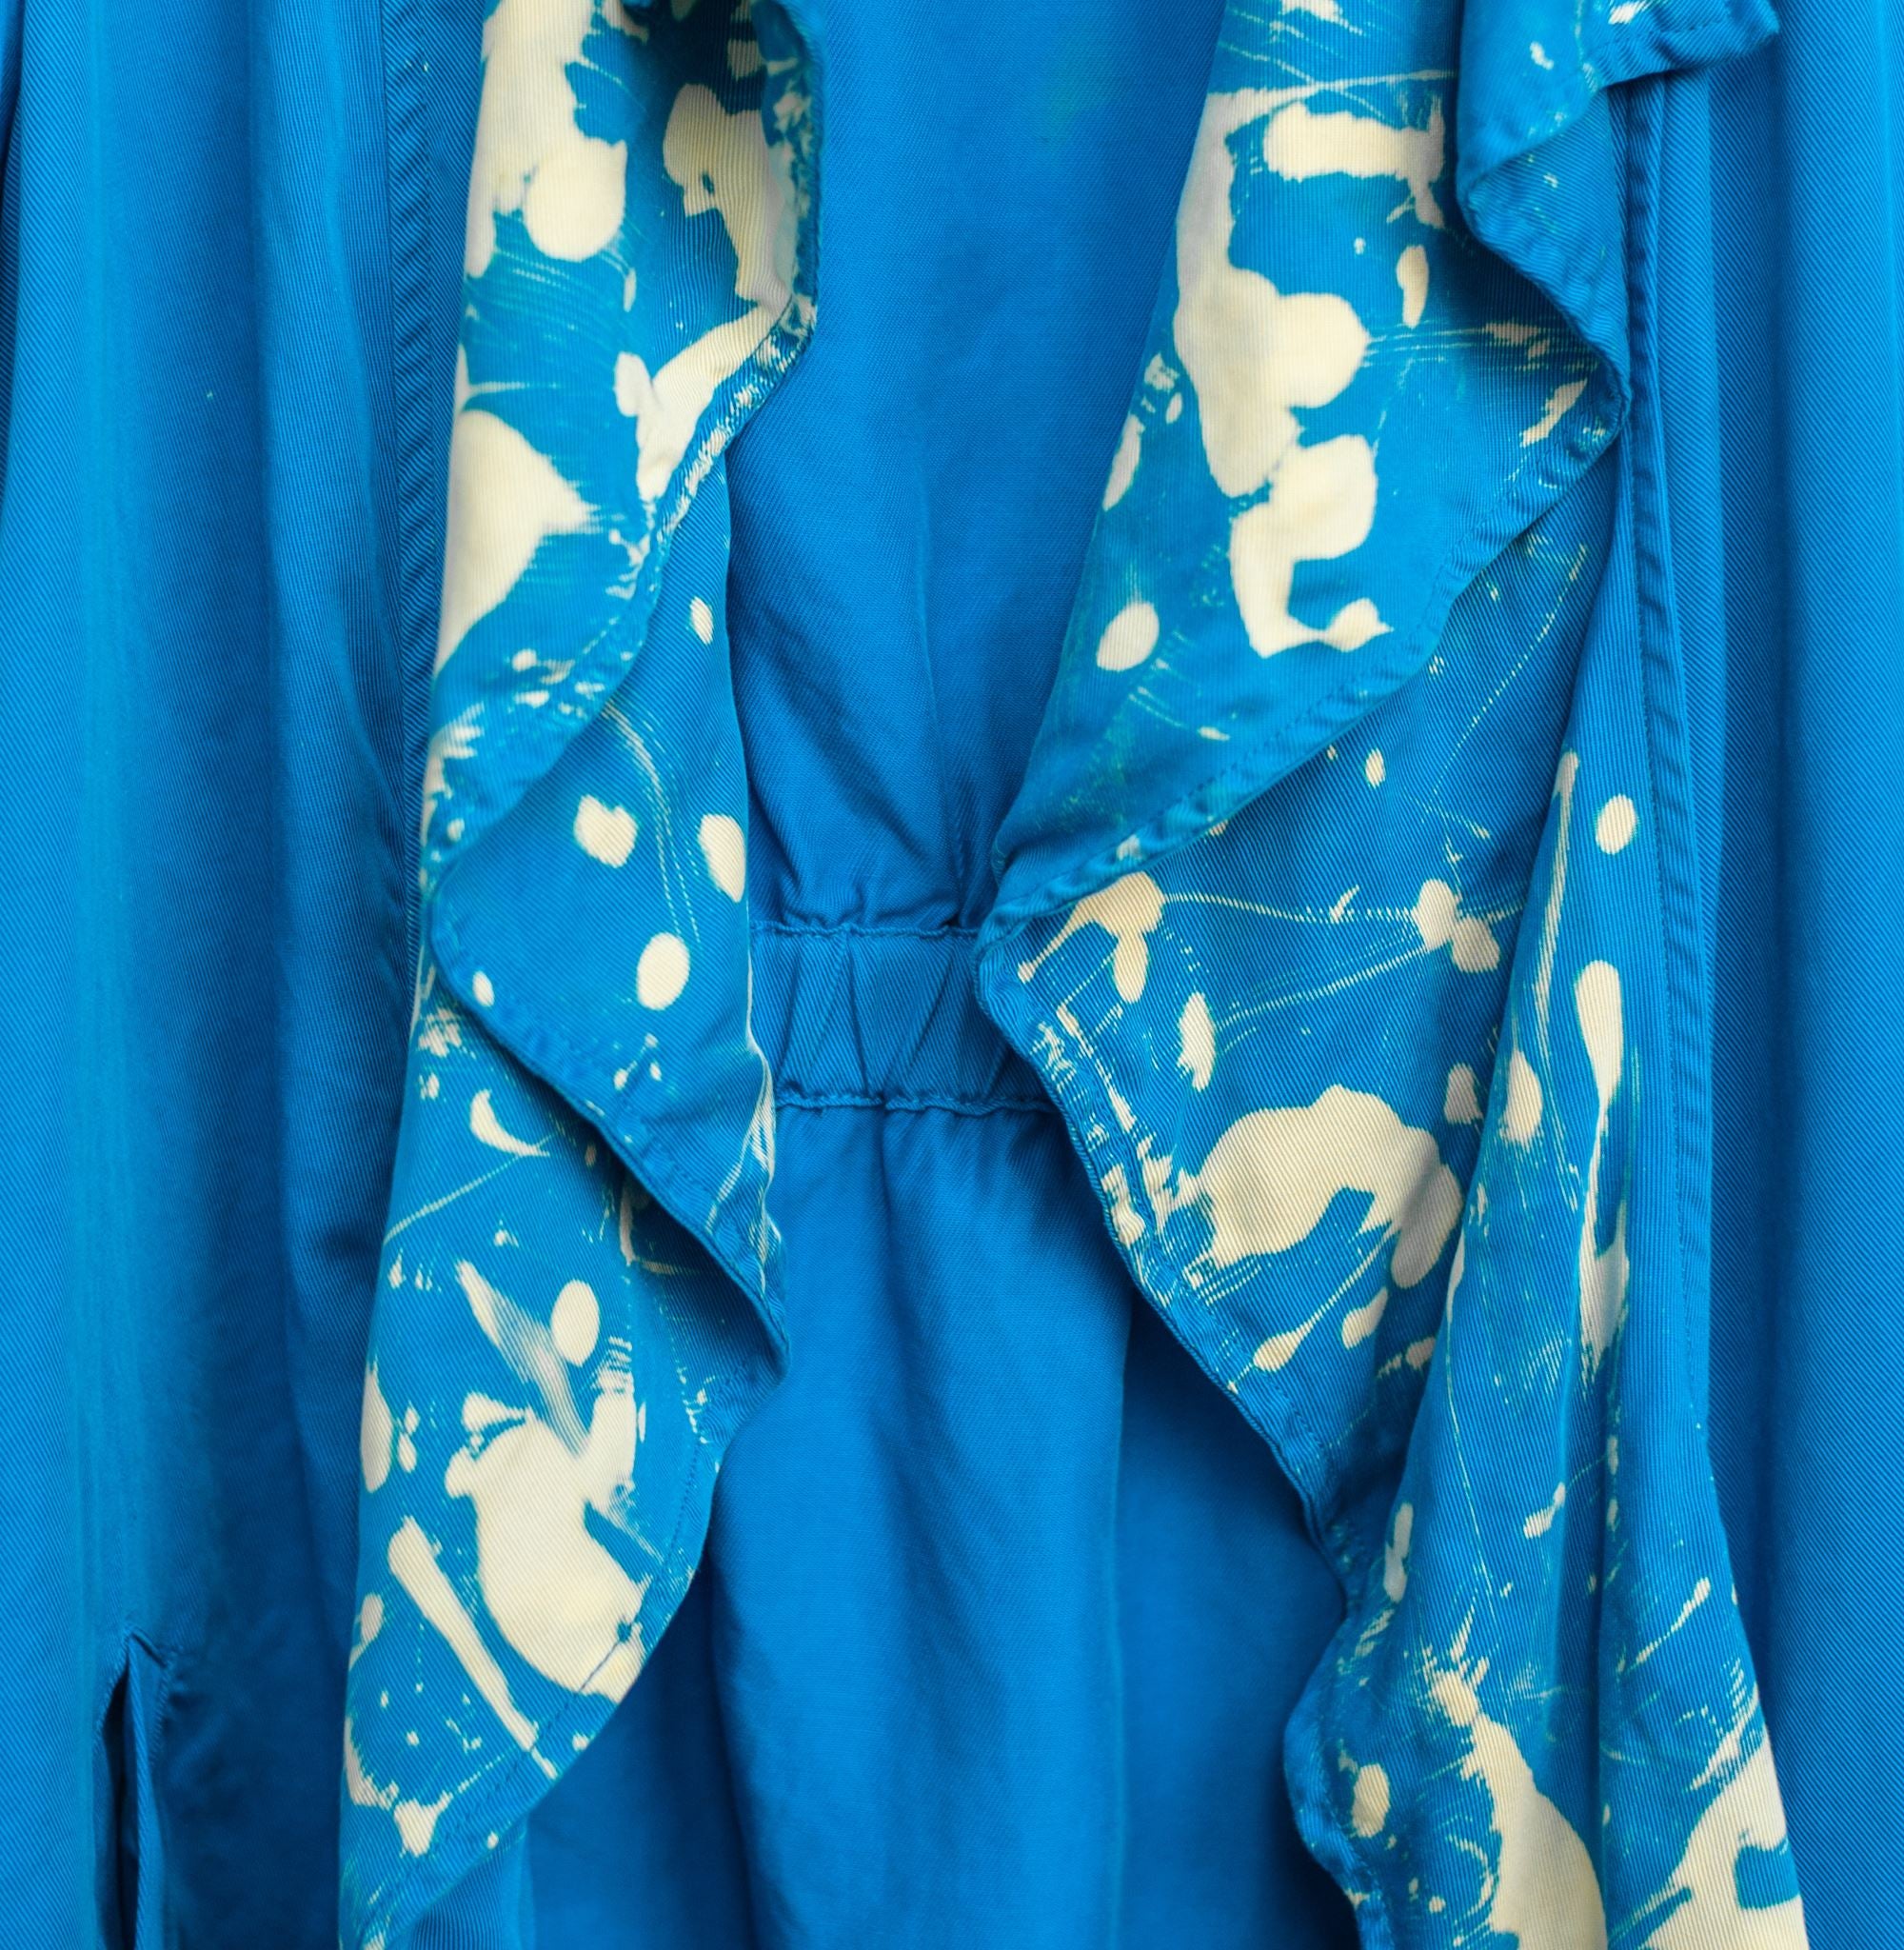 Rework Electric Blue Brush Art Bleached Duster Coats & Jackets Lara Dee Artistry 